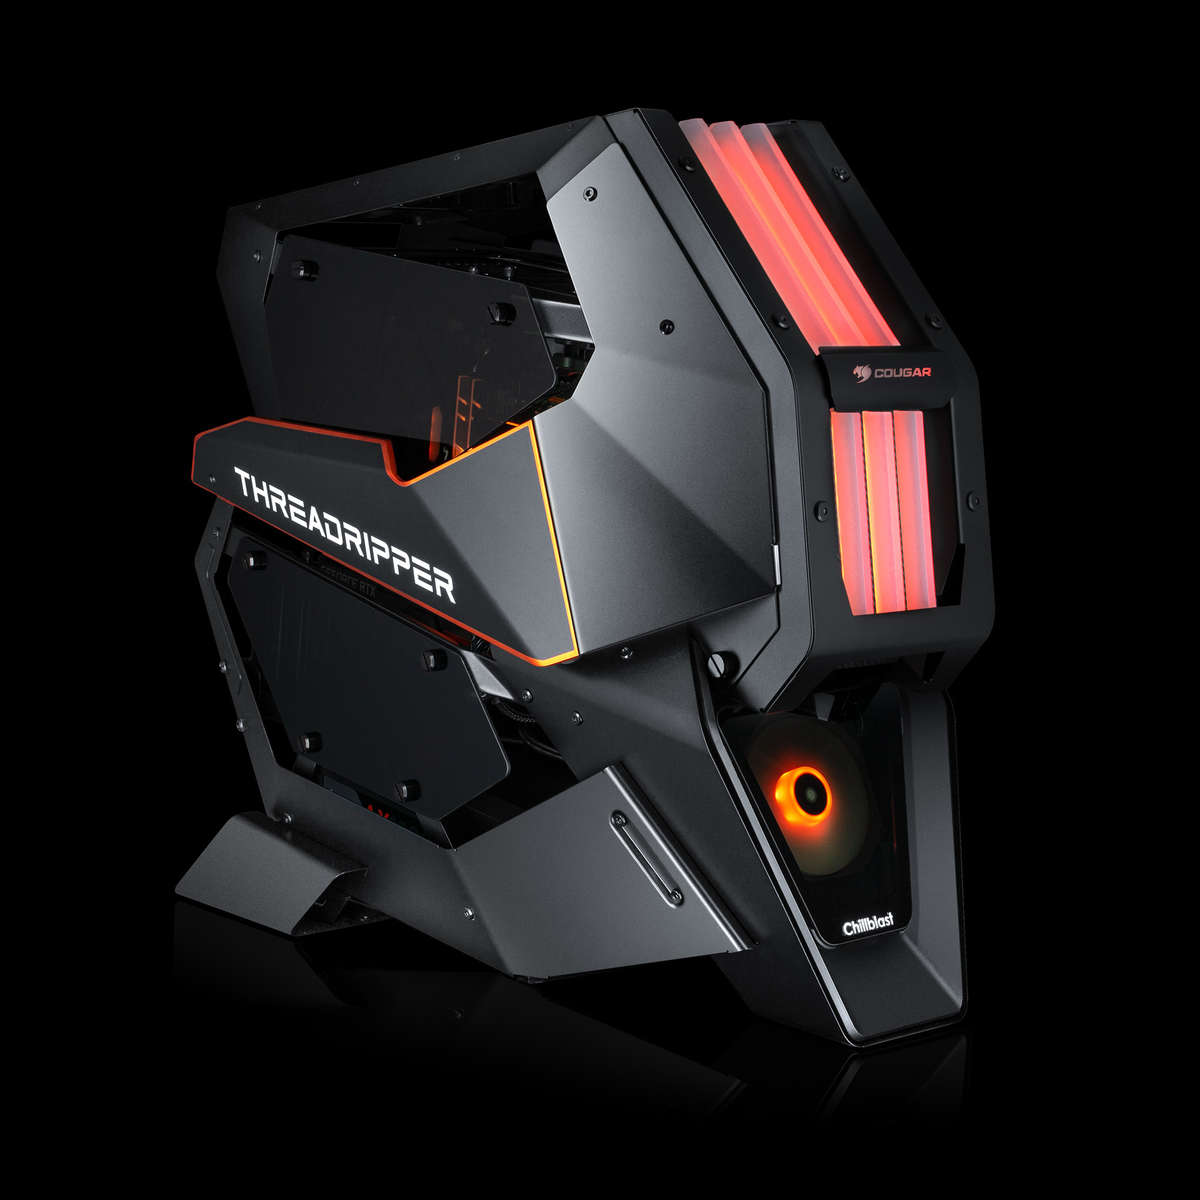 Image of the Chillblast Fusion Conqueror Ultimate Gaming PC